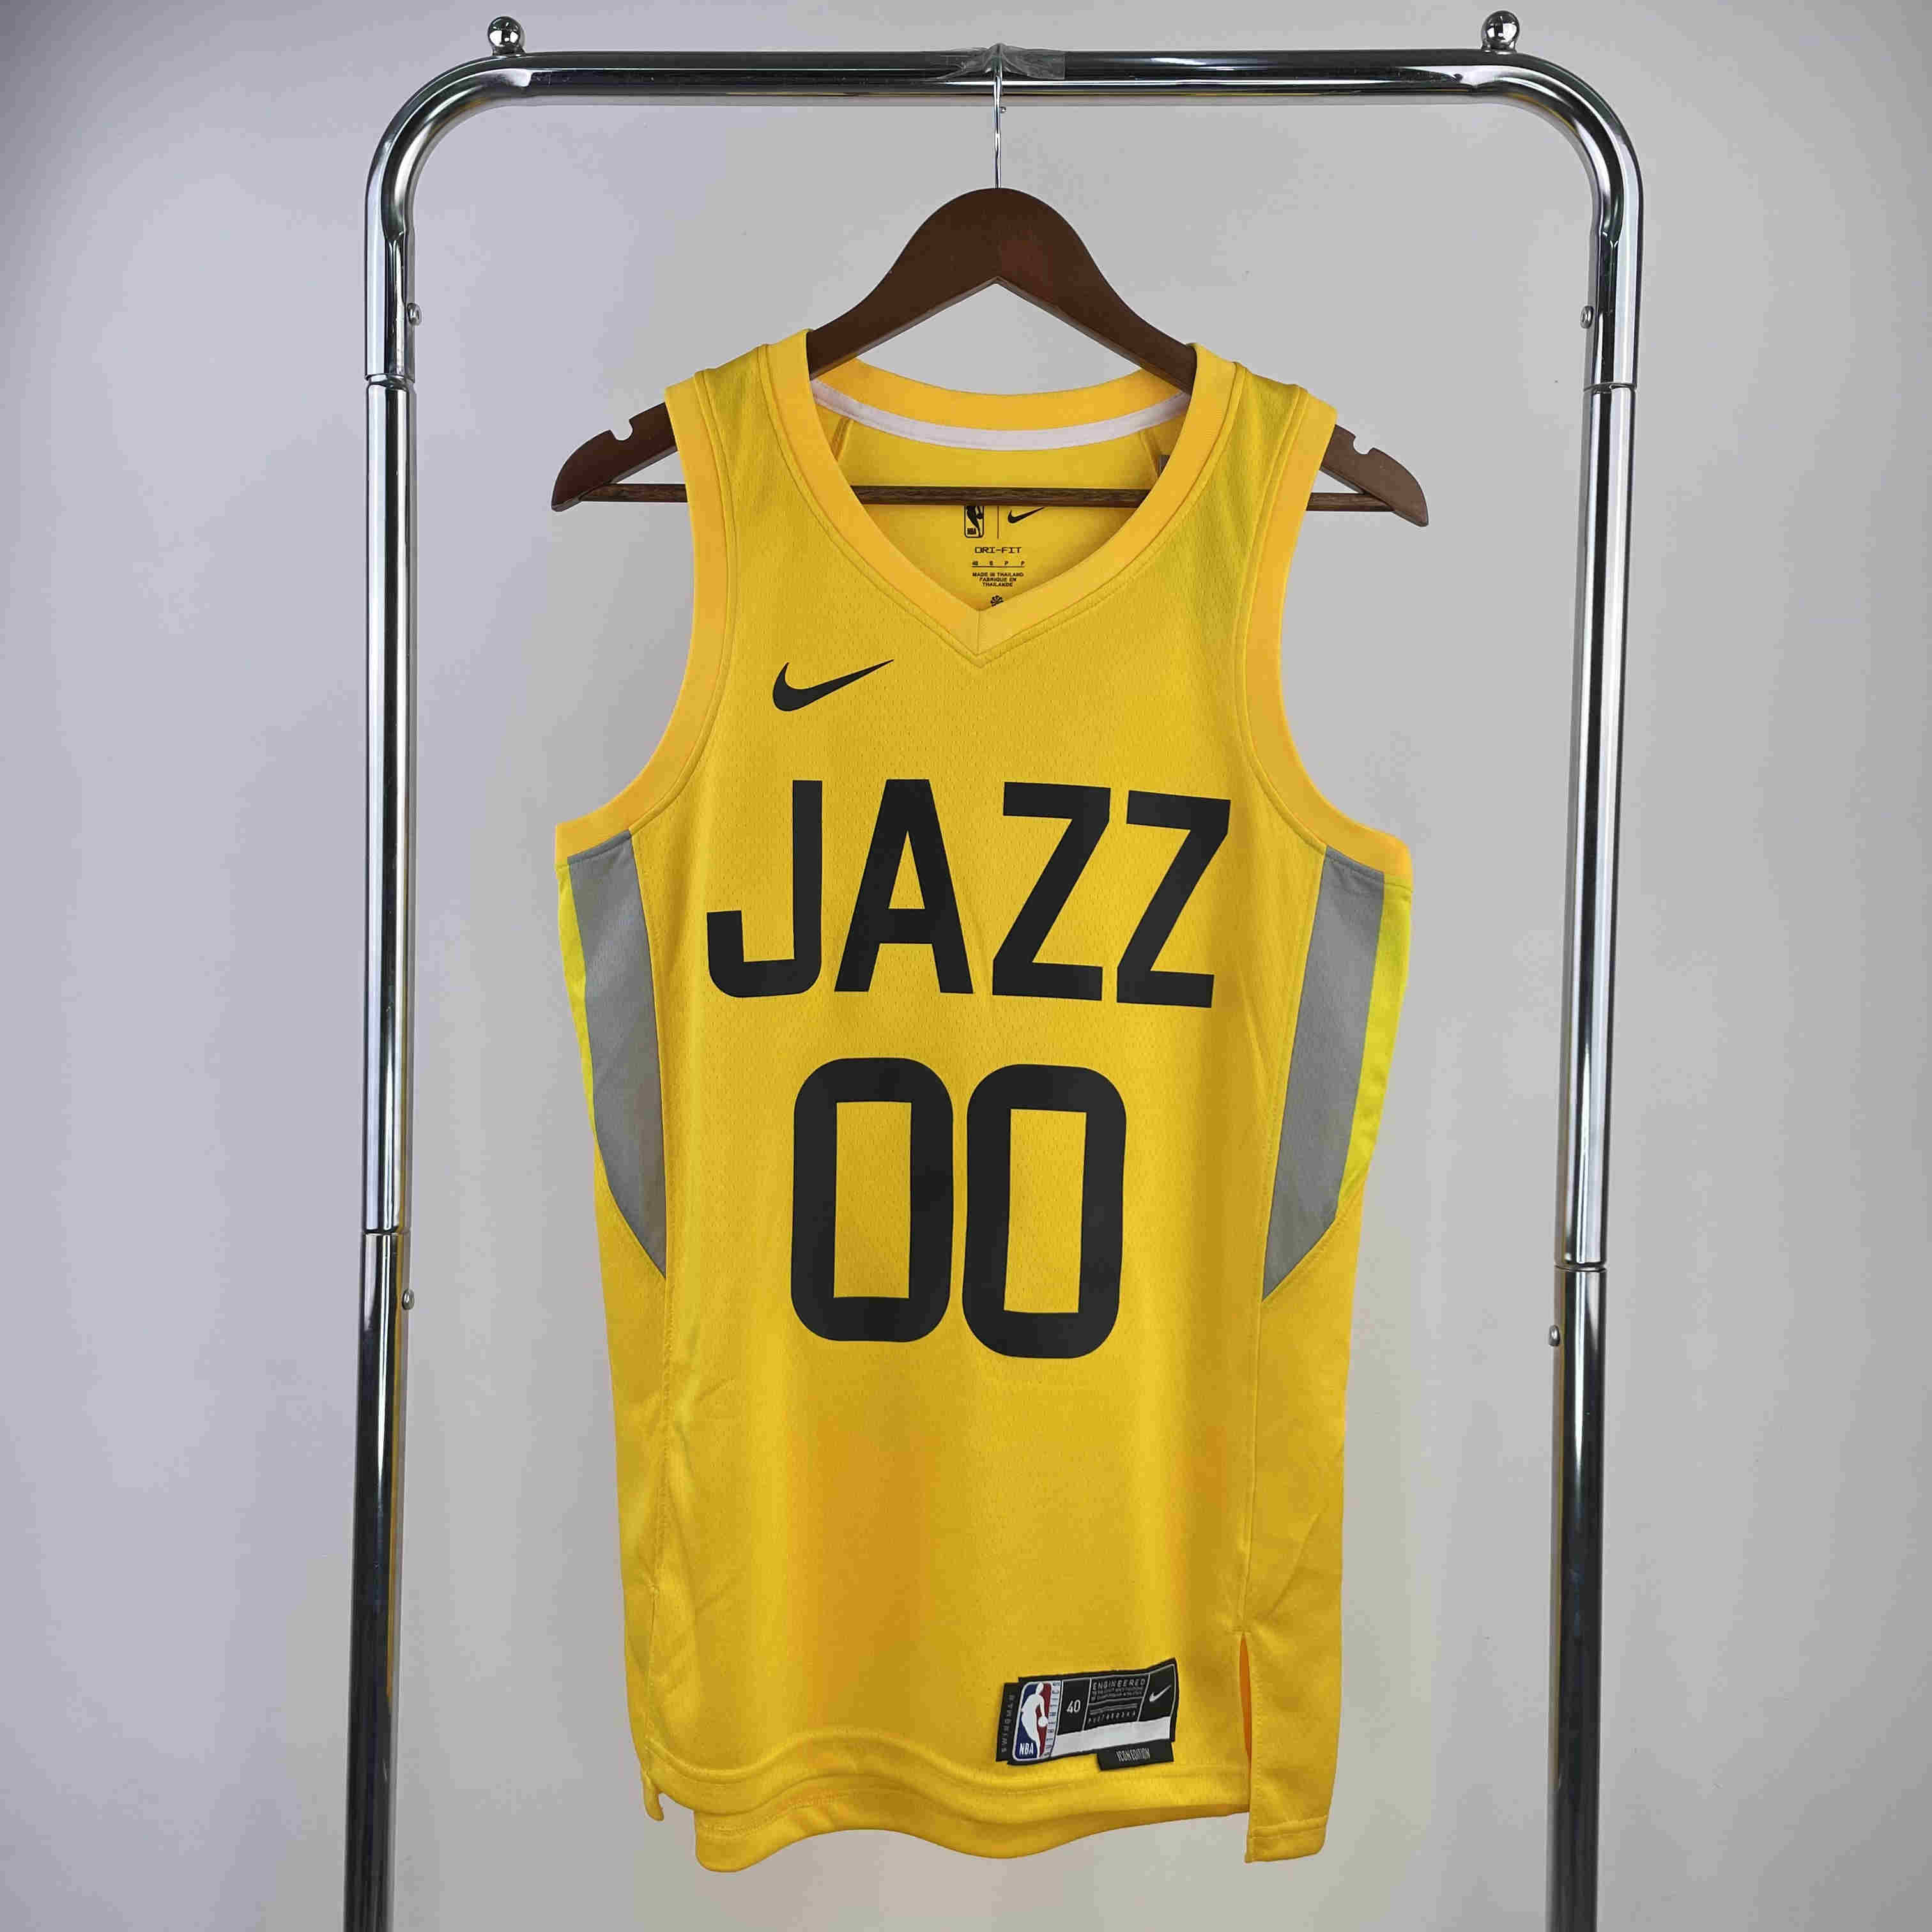 Utah Jazz NBA Jersey  Clarkson 00